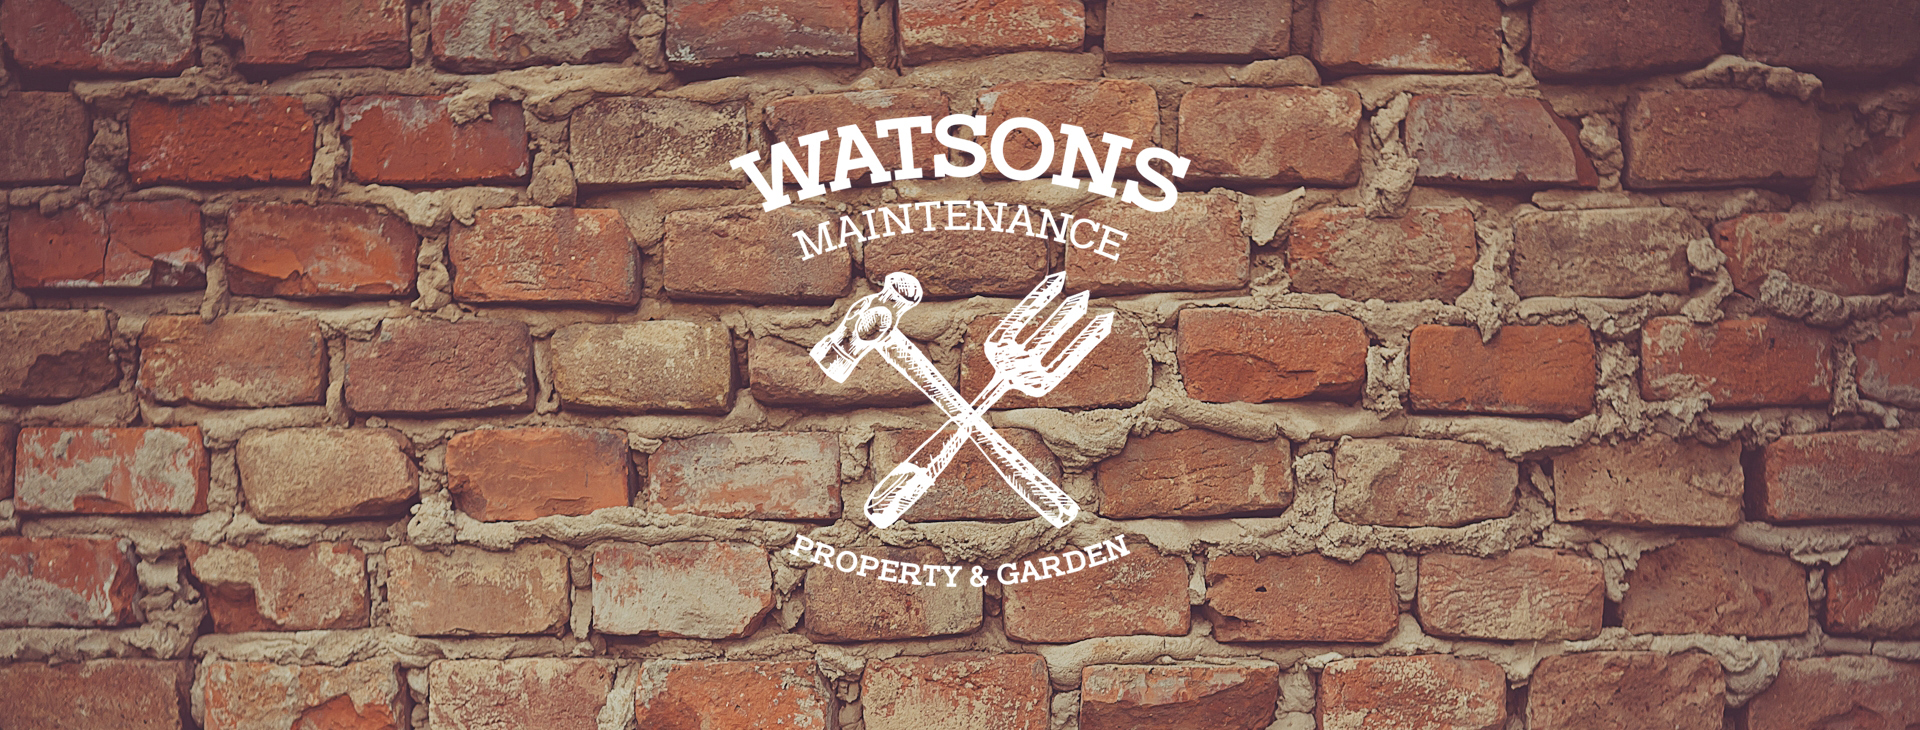 Watsons Maintenance Property Garden Maintenance